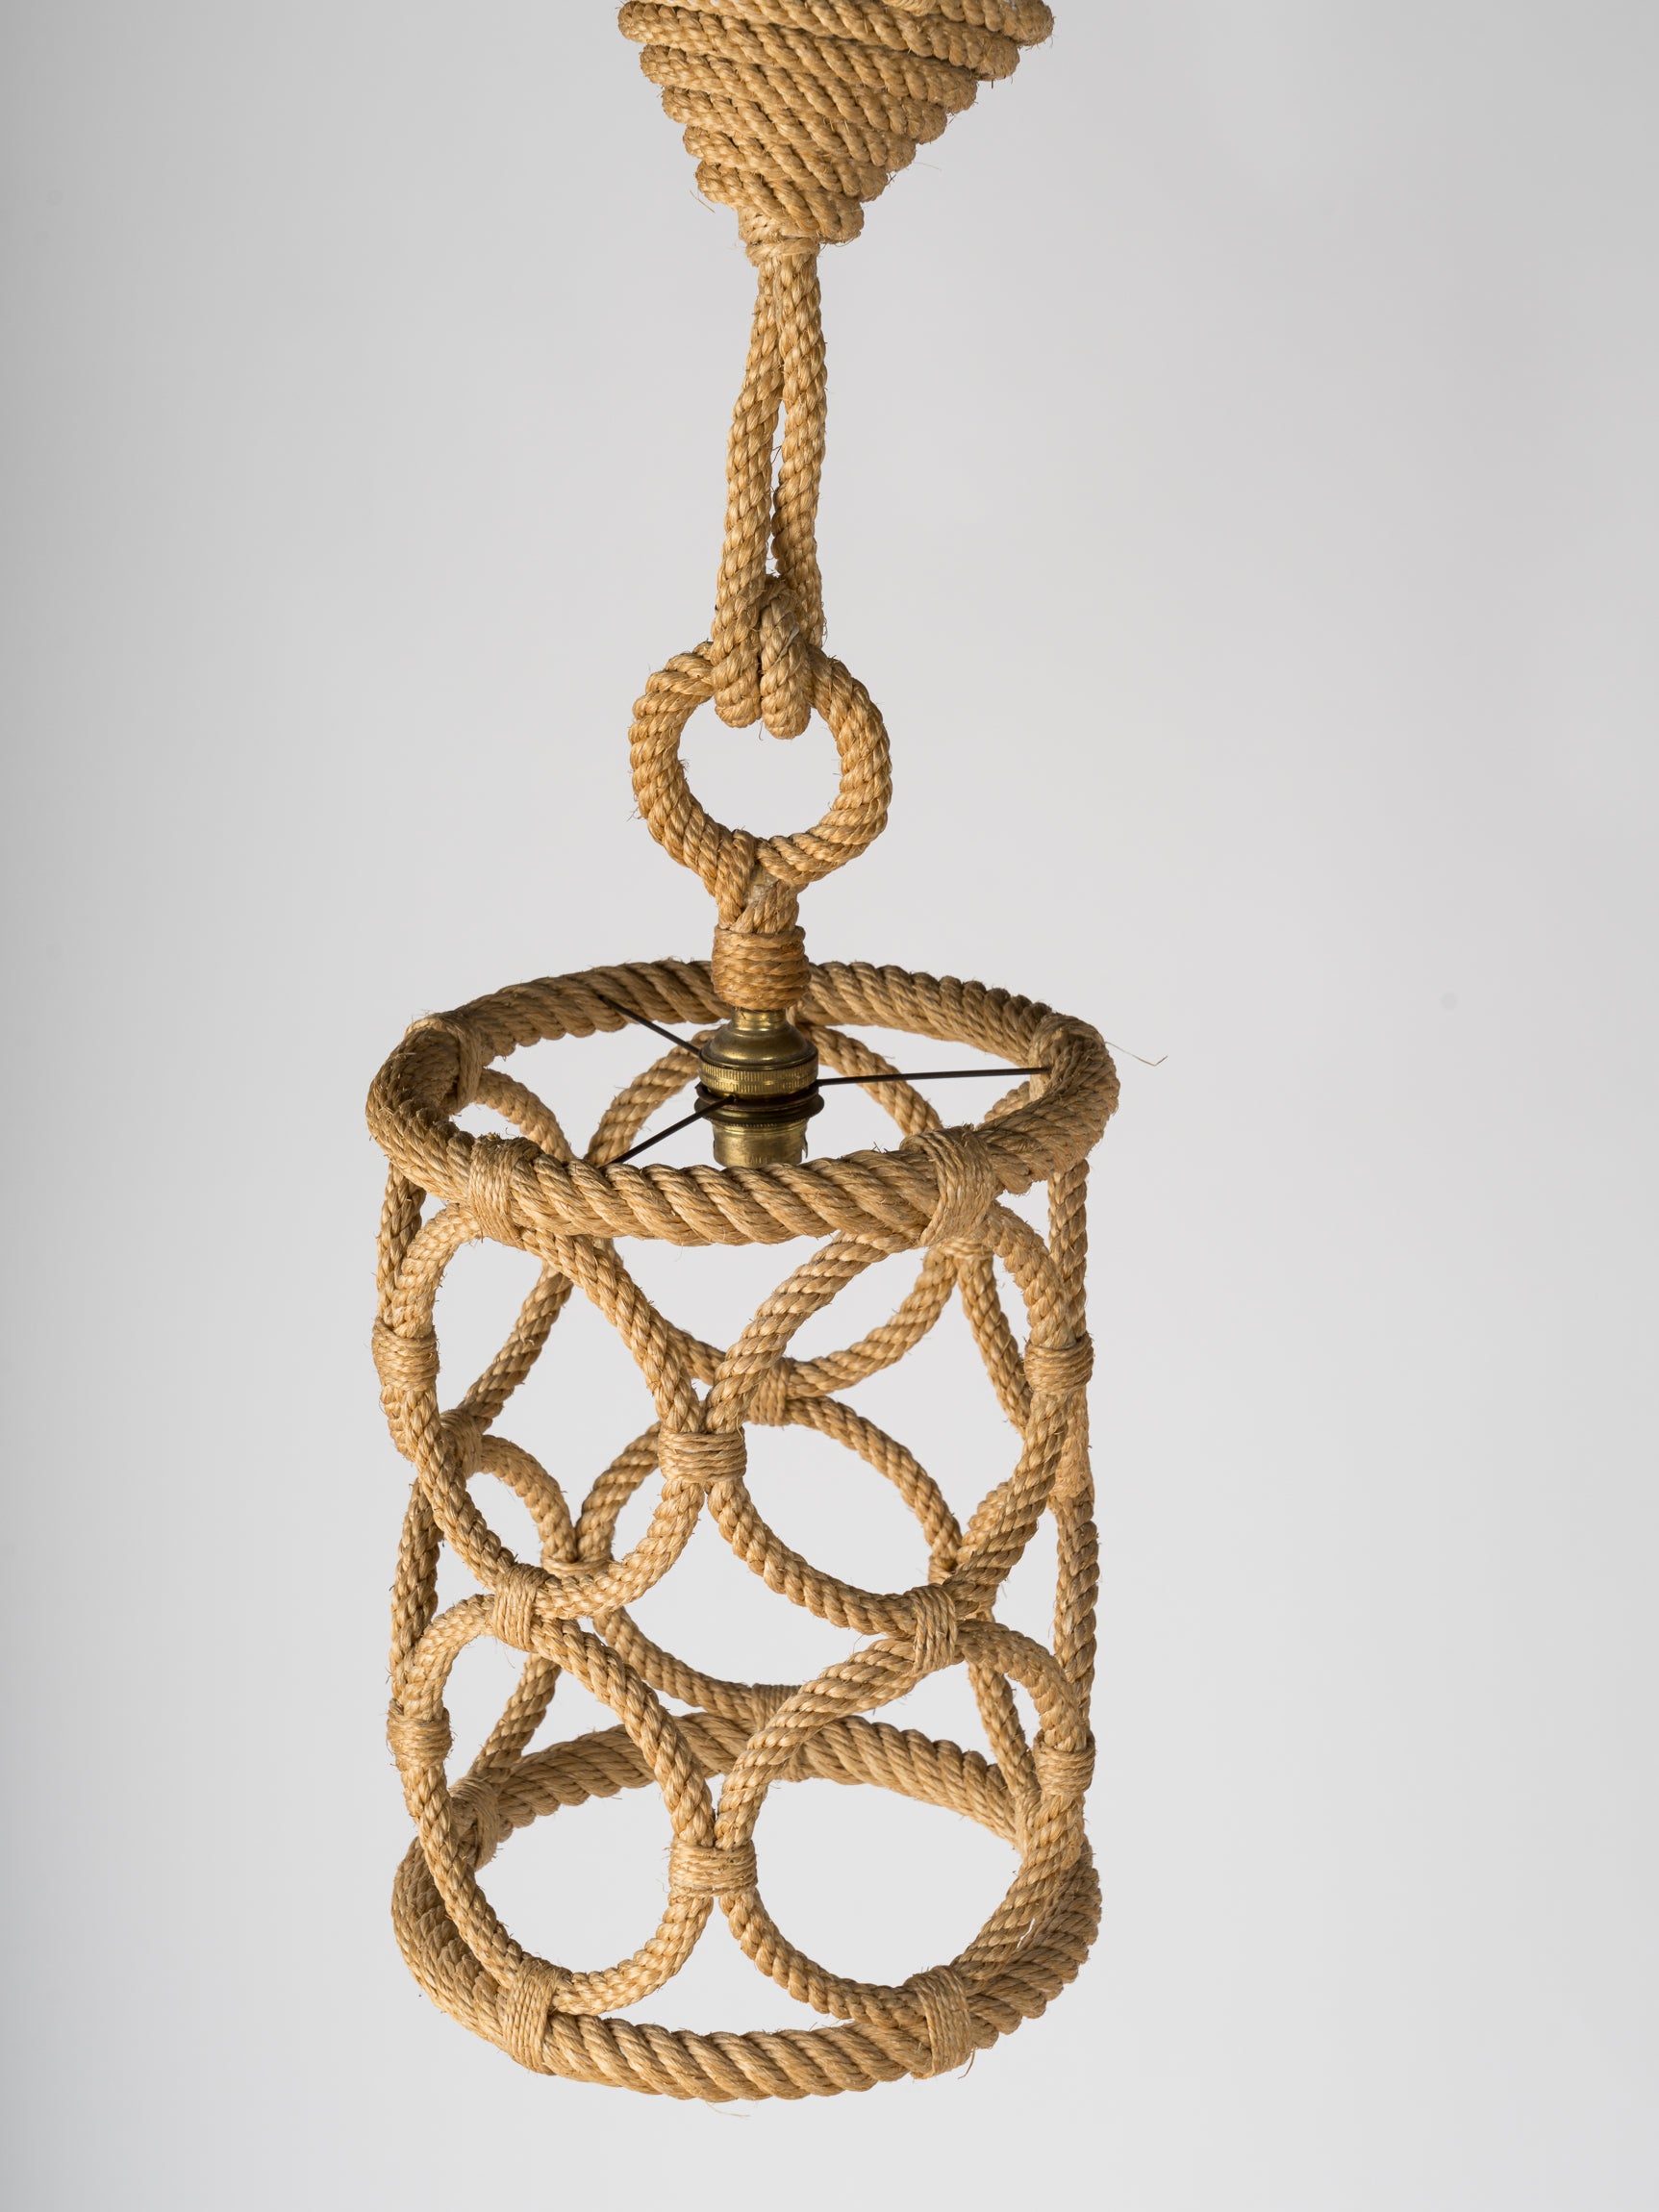 Lantern Shaped Rope Pendant by Audoux Minnet, France, 1960's